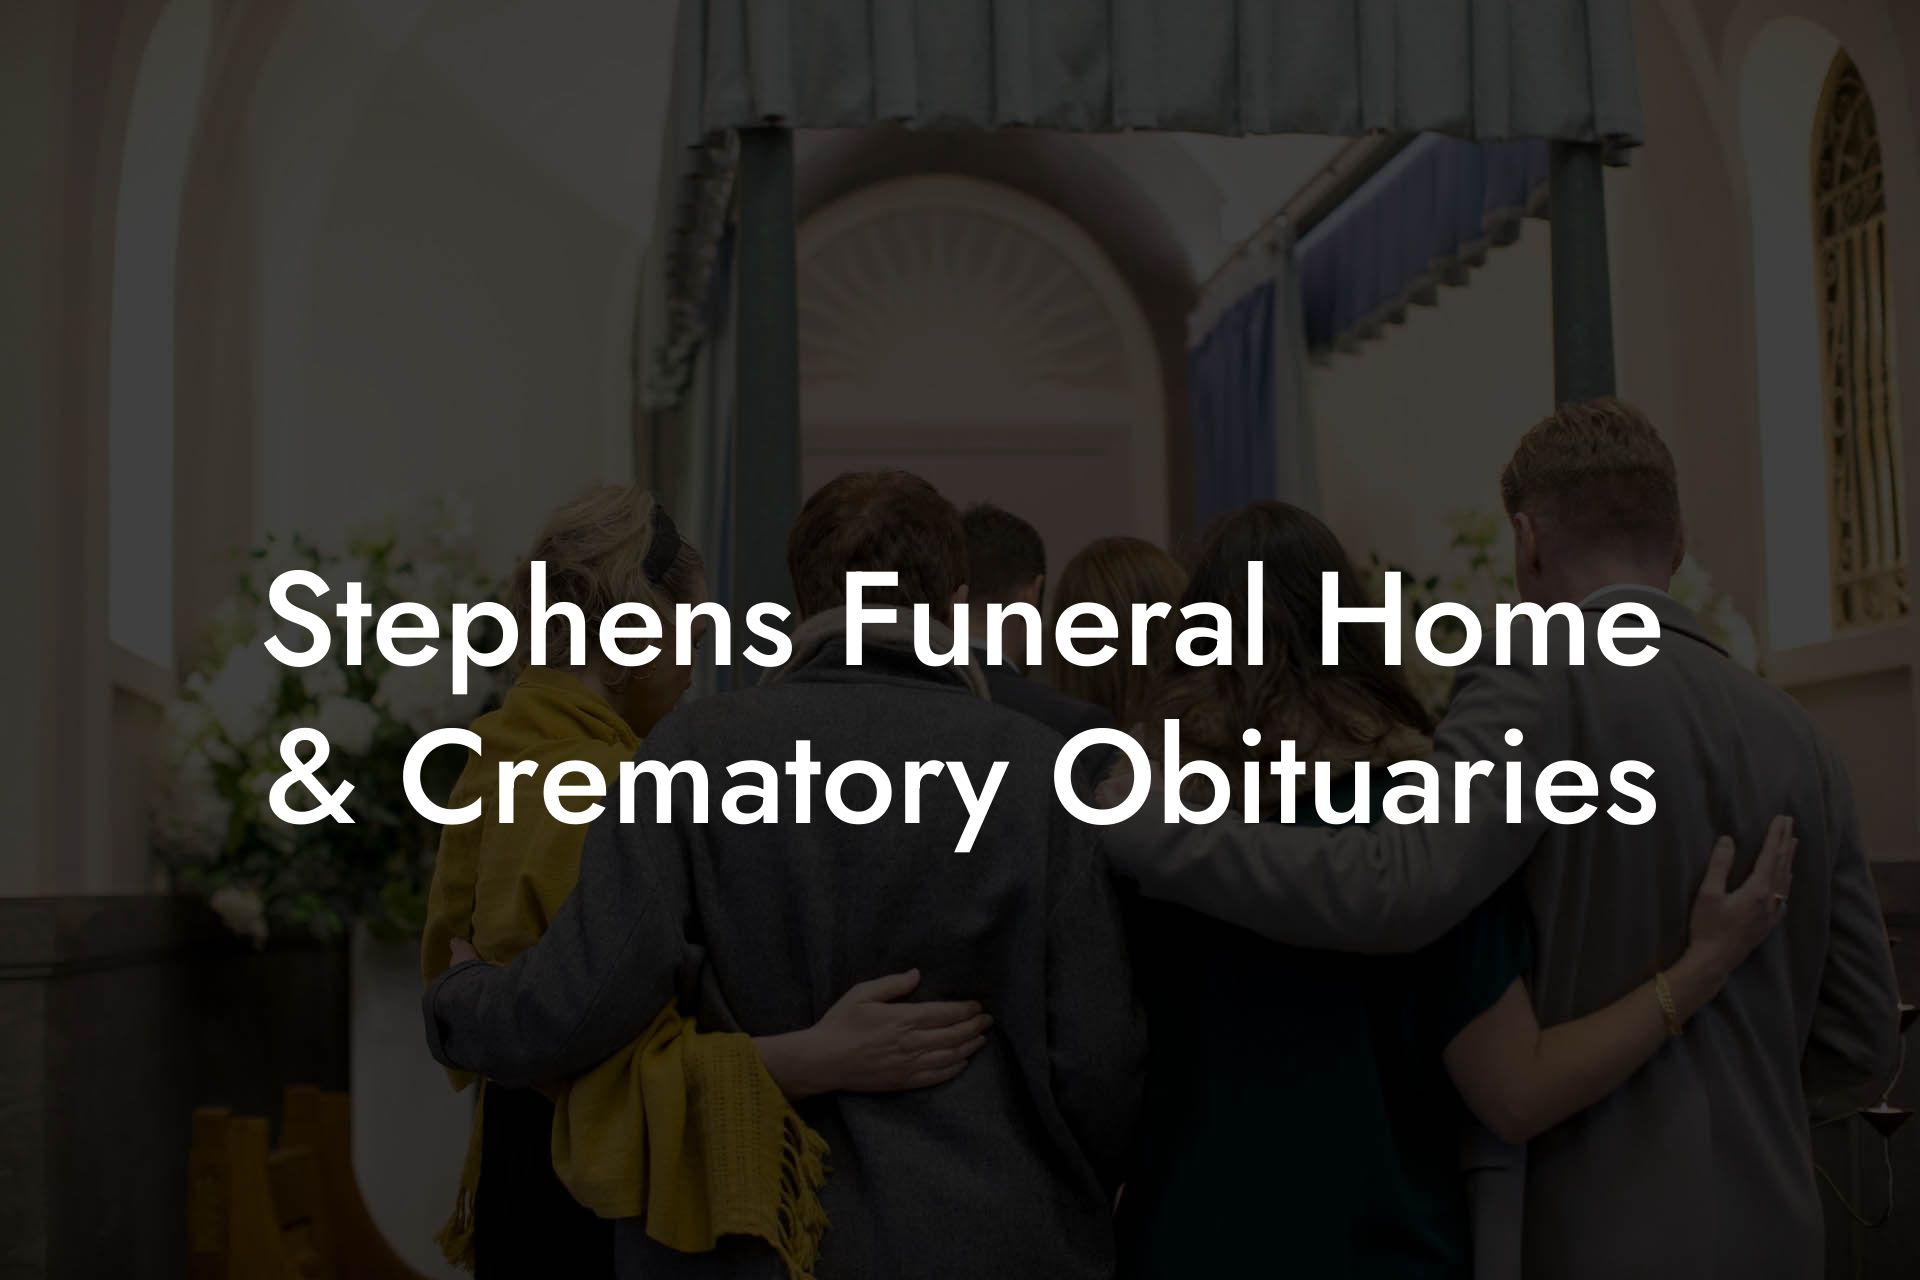 Stephens Funeral Home & Crematory Obituaries